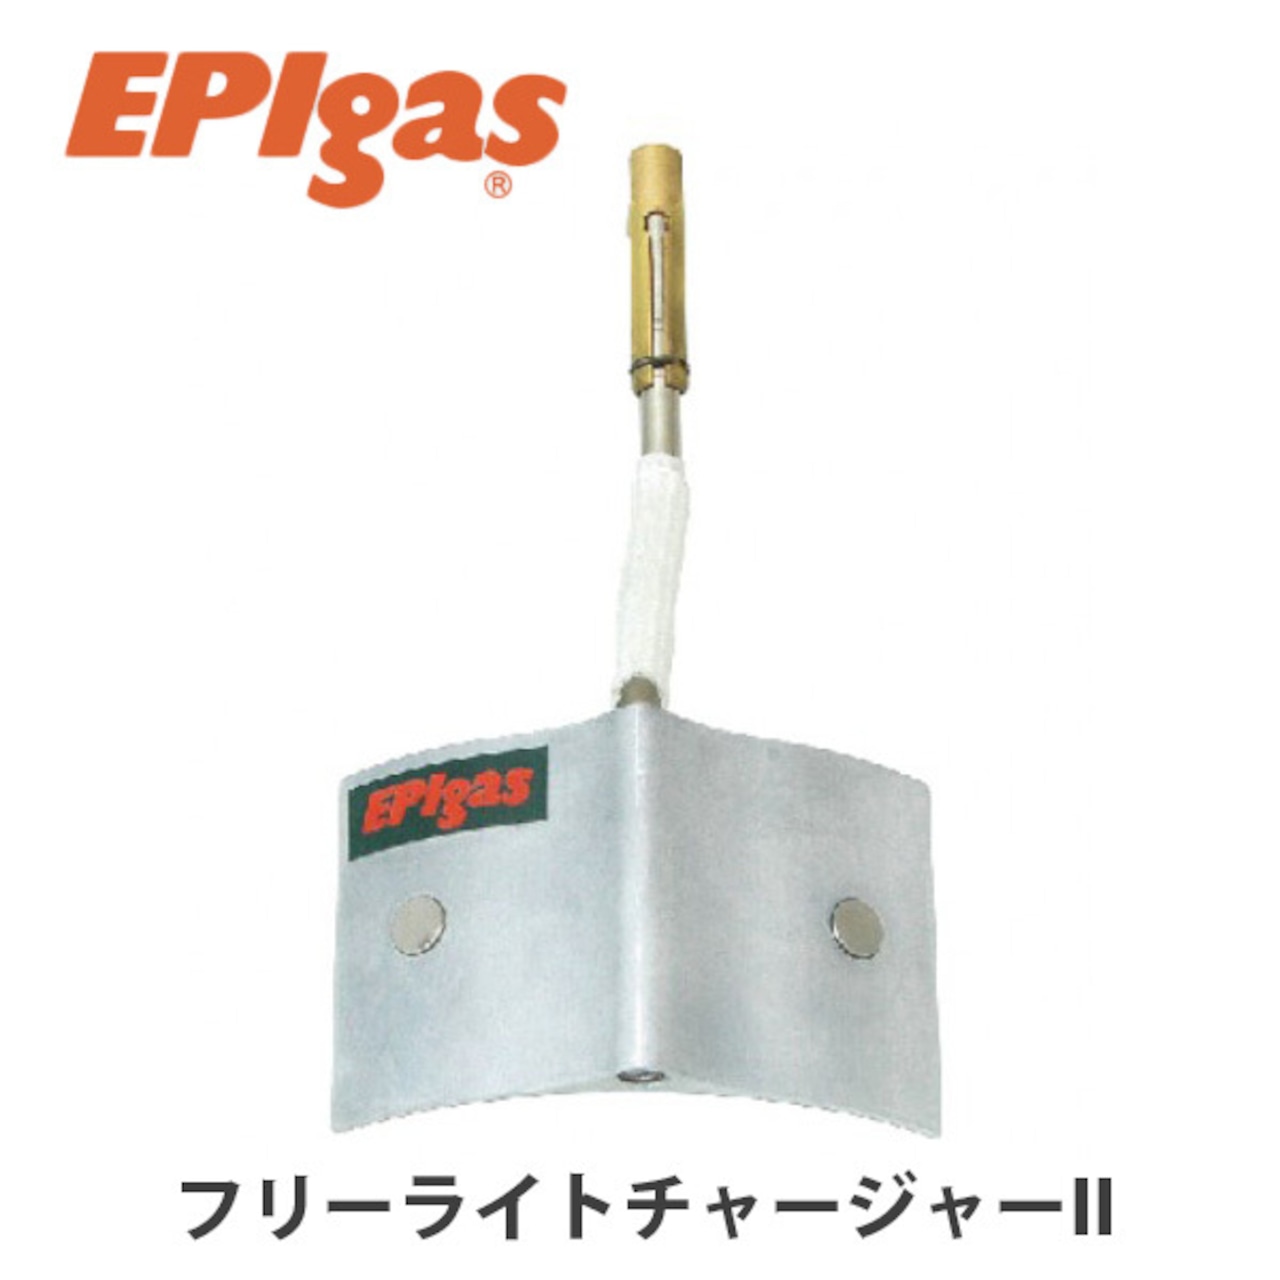 EPIgas(イーピーアイ ガス) フリーライトチャージャーII